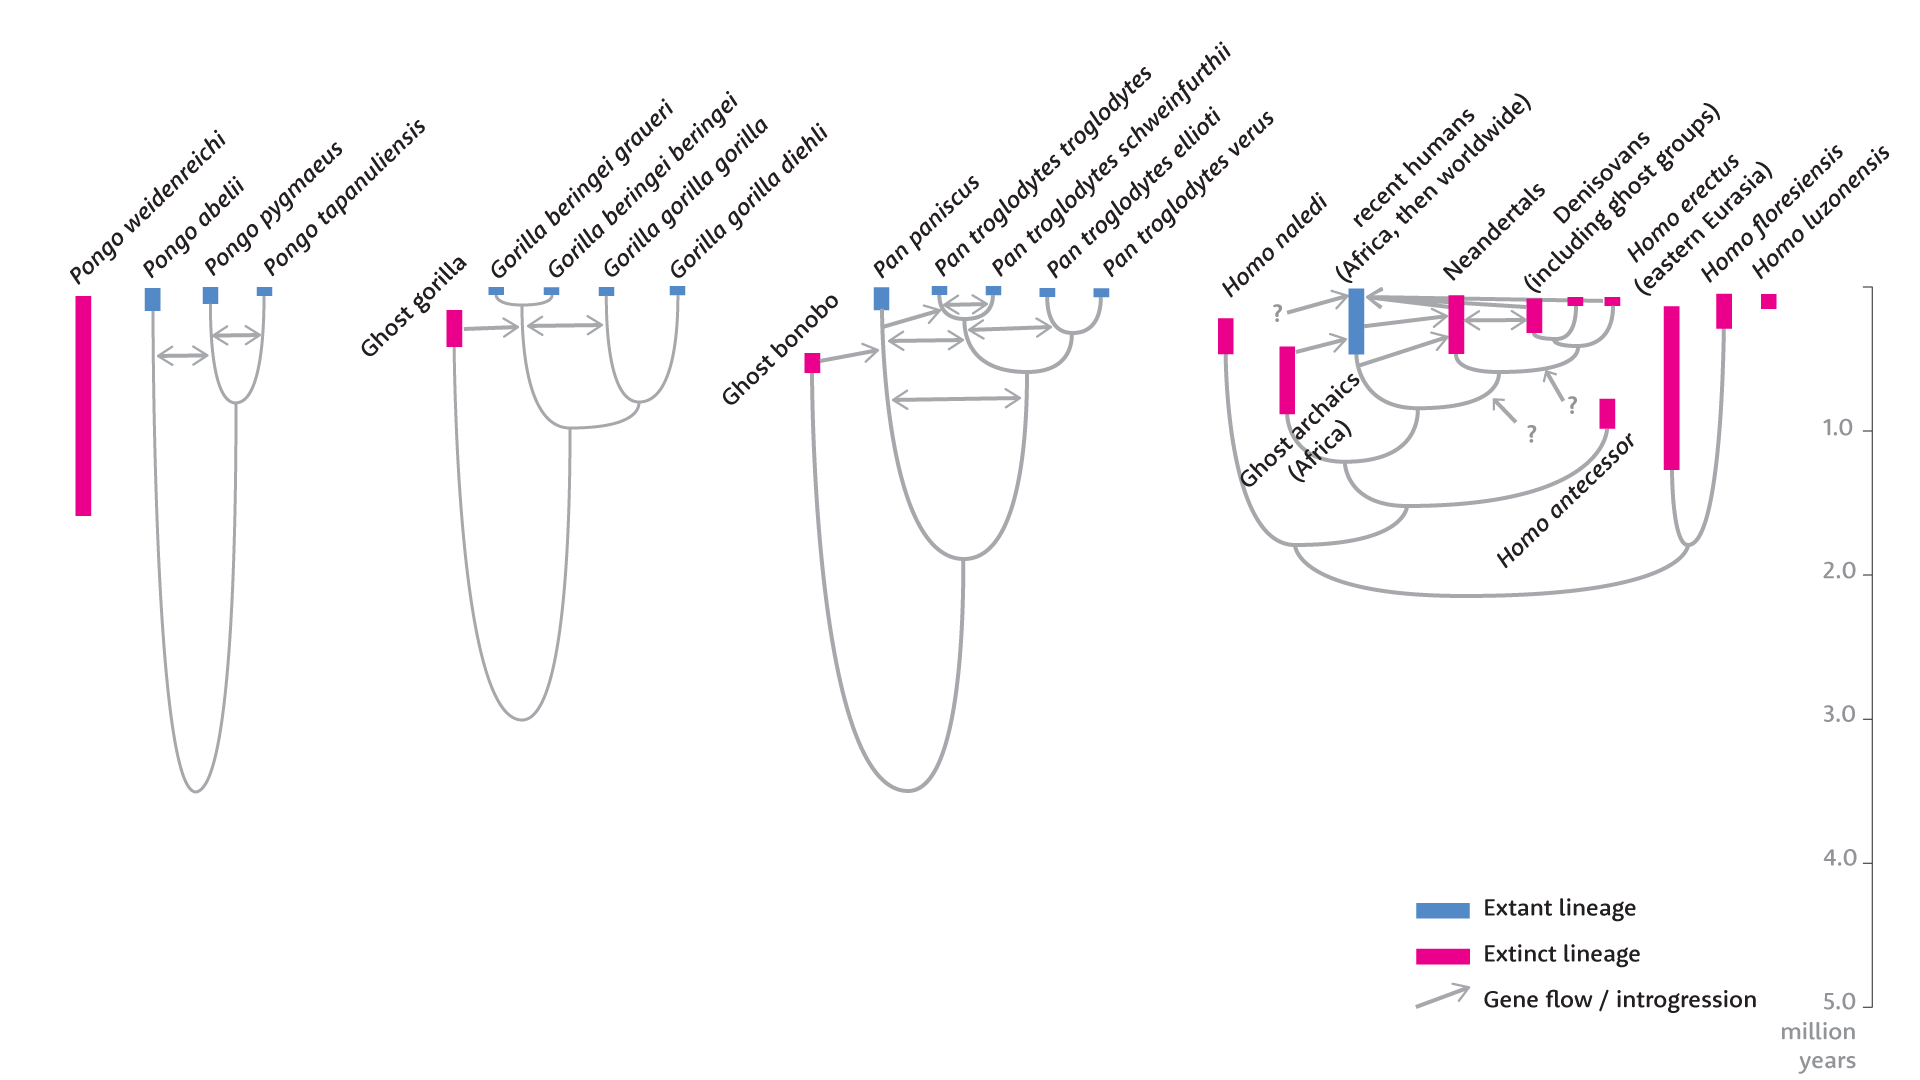 Comparison of phylogenetic diagrams of orangutans, gorillas, chimpanzees and bonobos, and hominins.